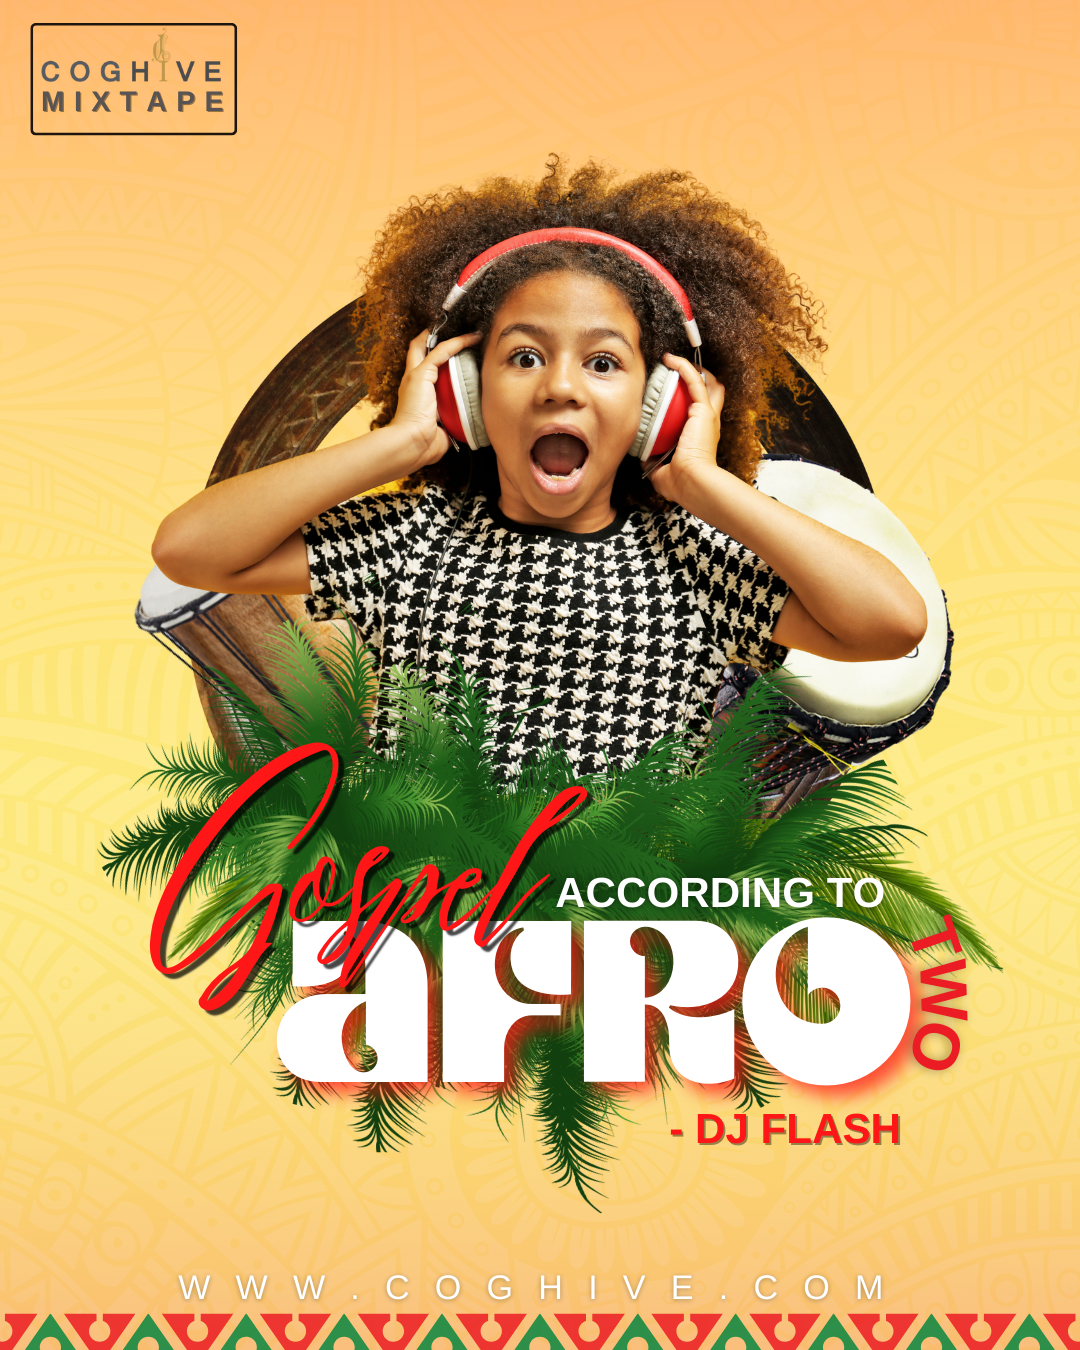 [Download Mixtape] Gospel According To Afrobeats 2 - Dj Flash X COGHIVE Media